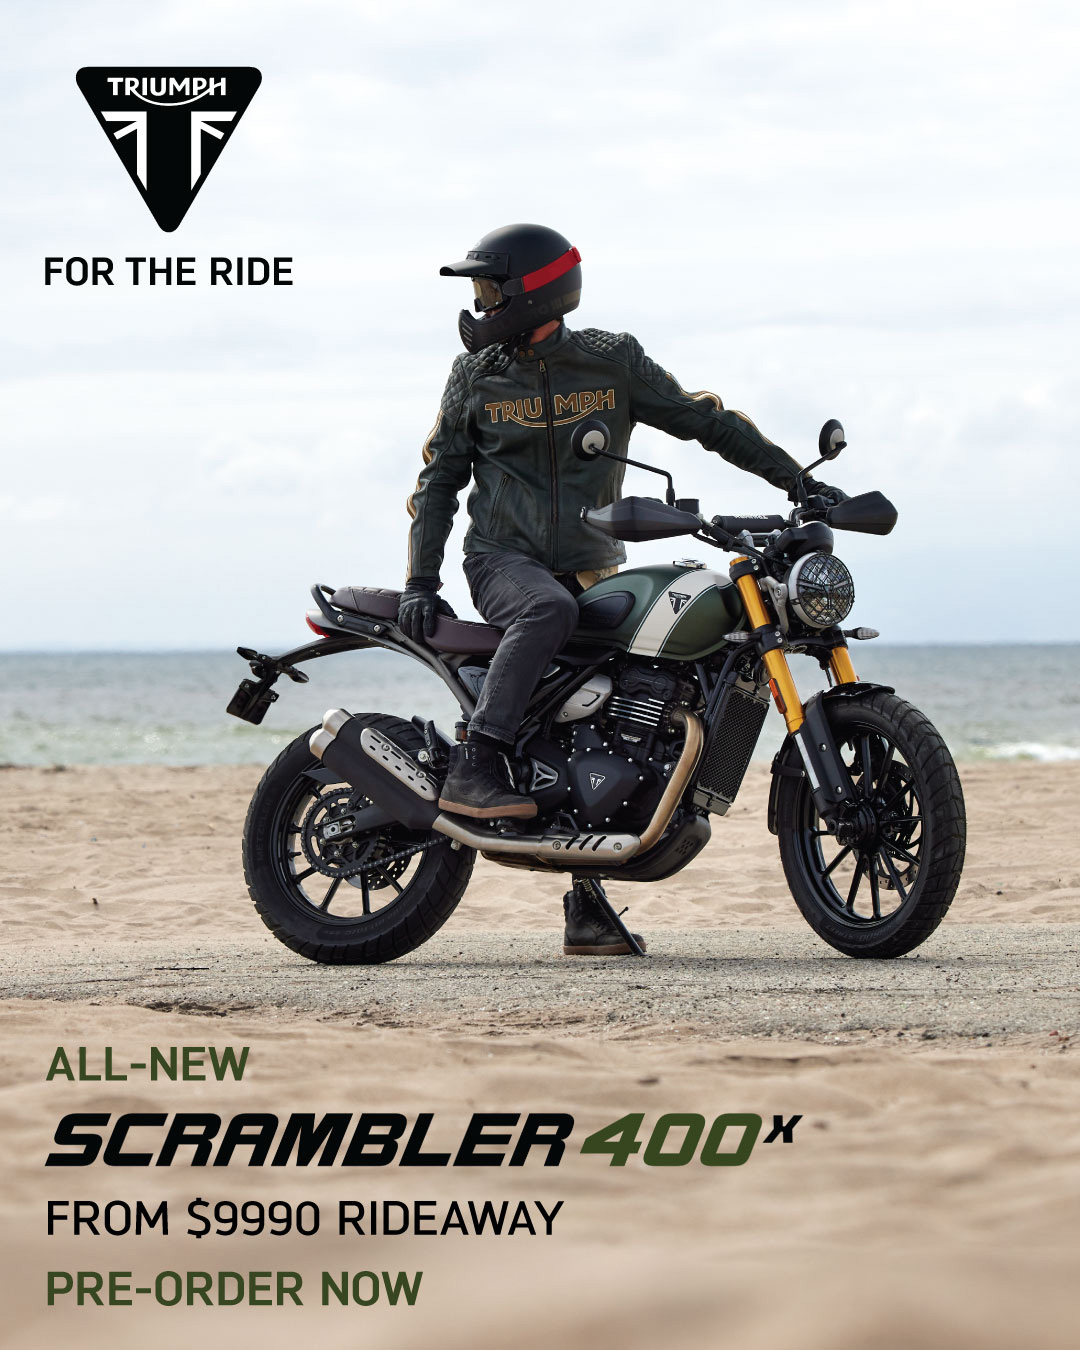 Preorder the new Scrambler 400 X